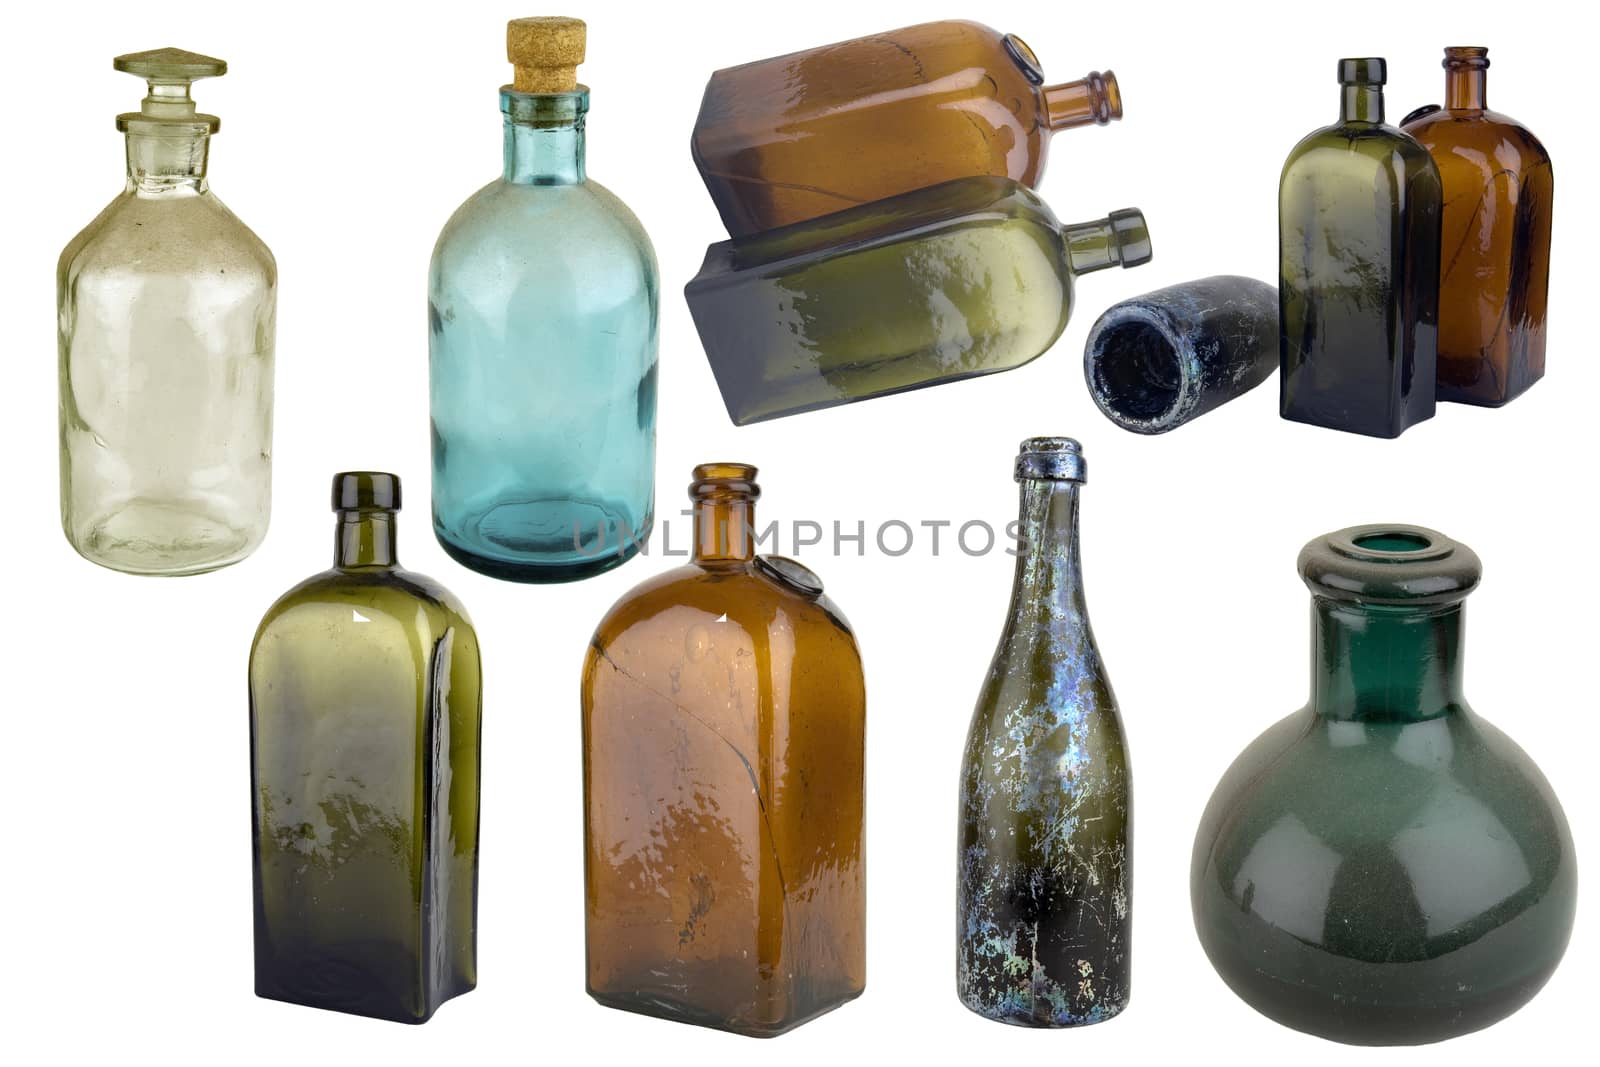 Antiquarian glass bottle by sibrikov